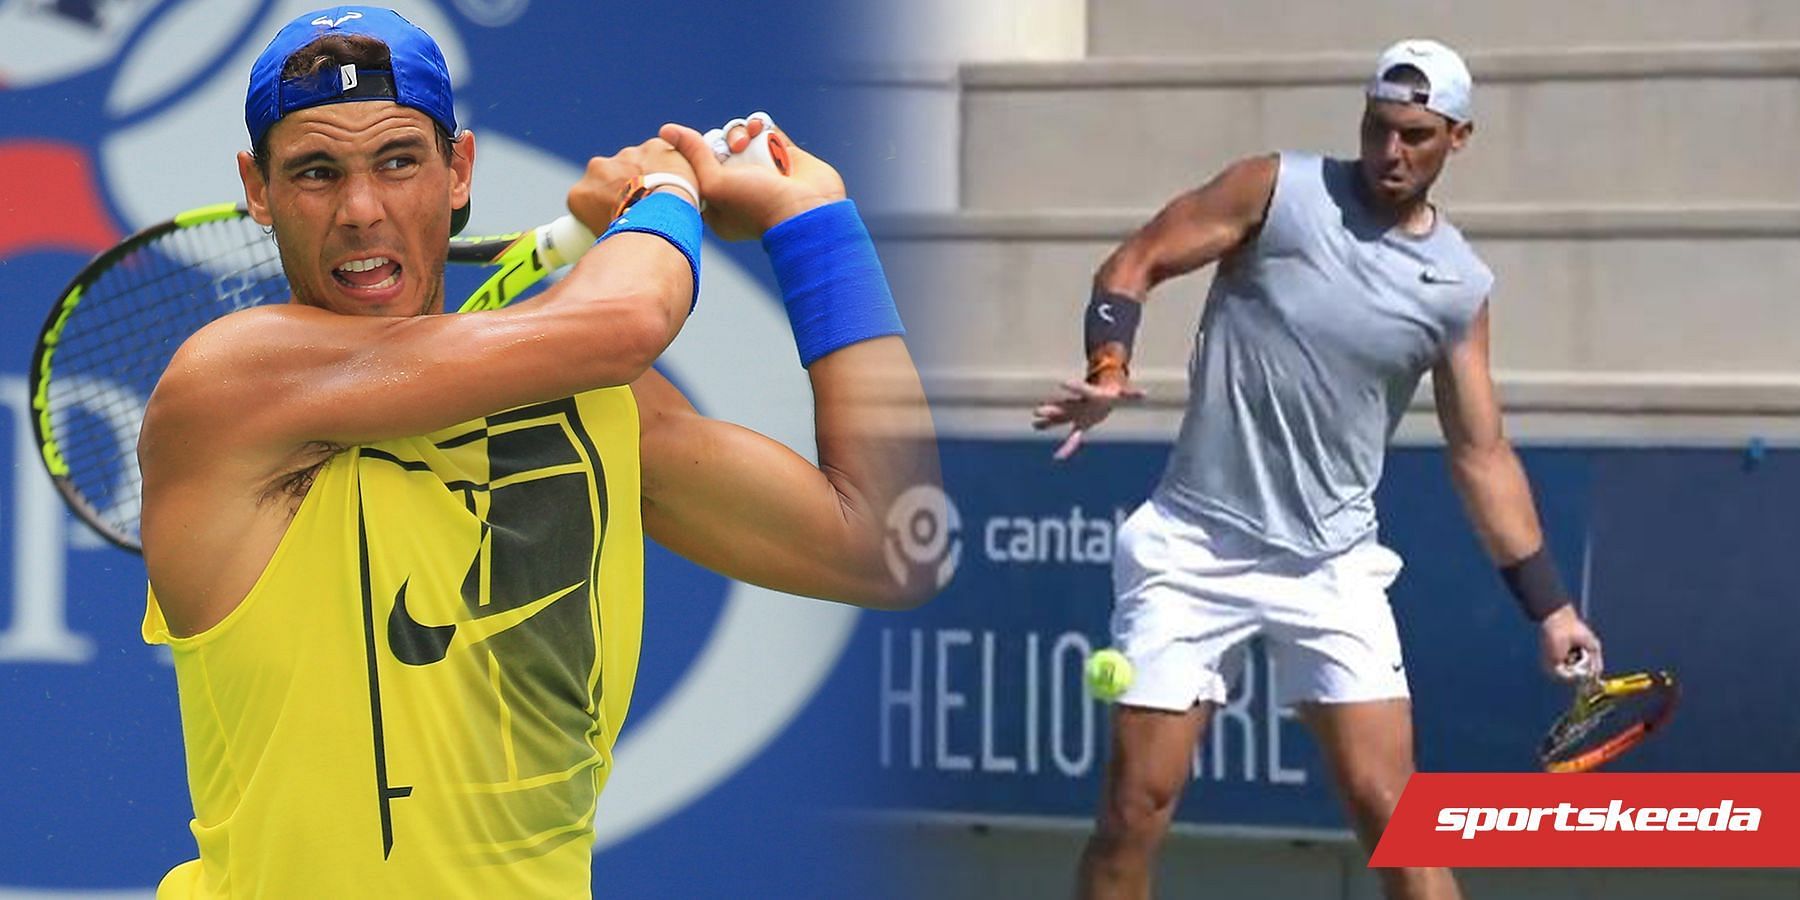 Rafael Nadal was seen practicing in Mallorca.